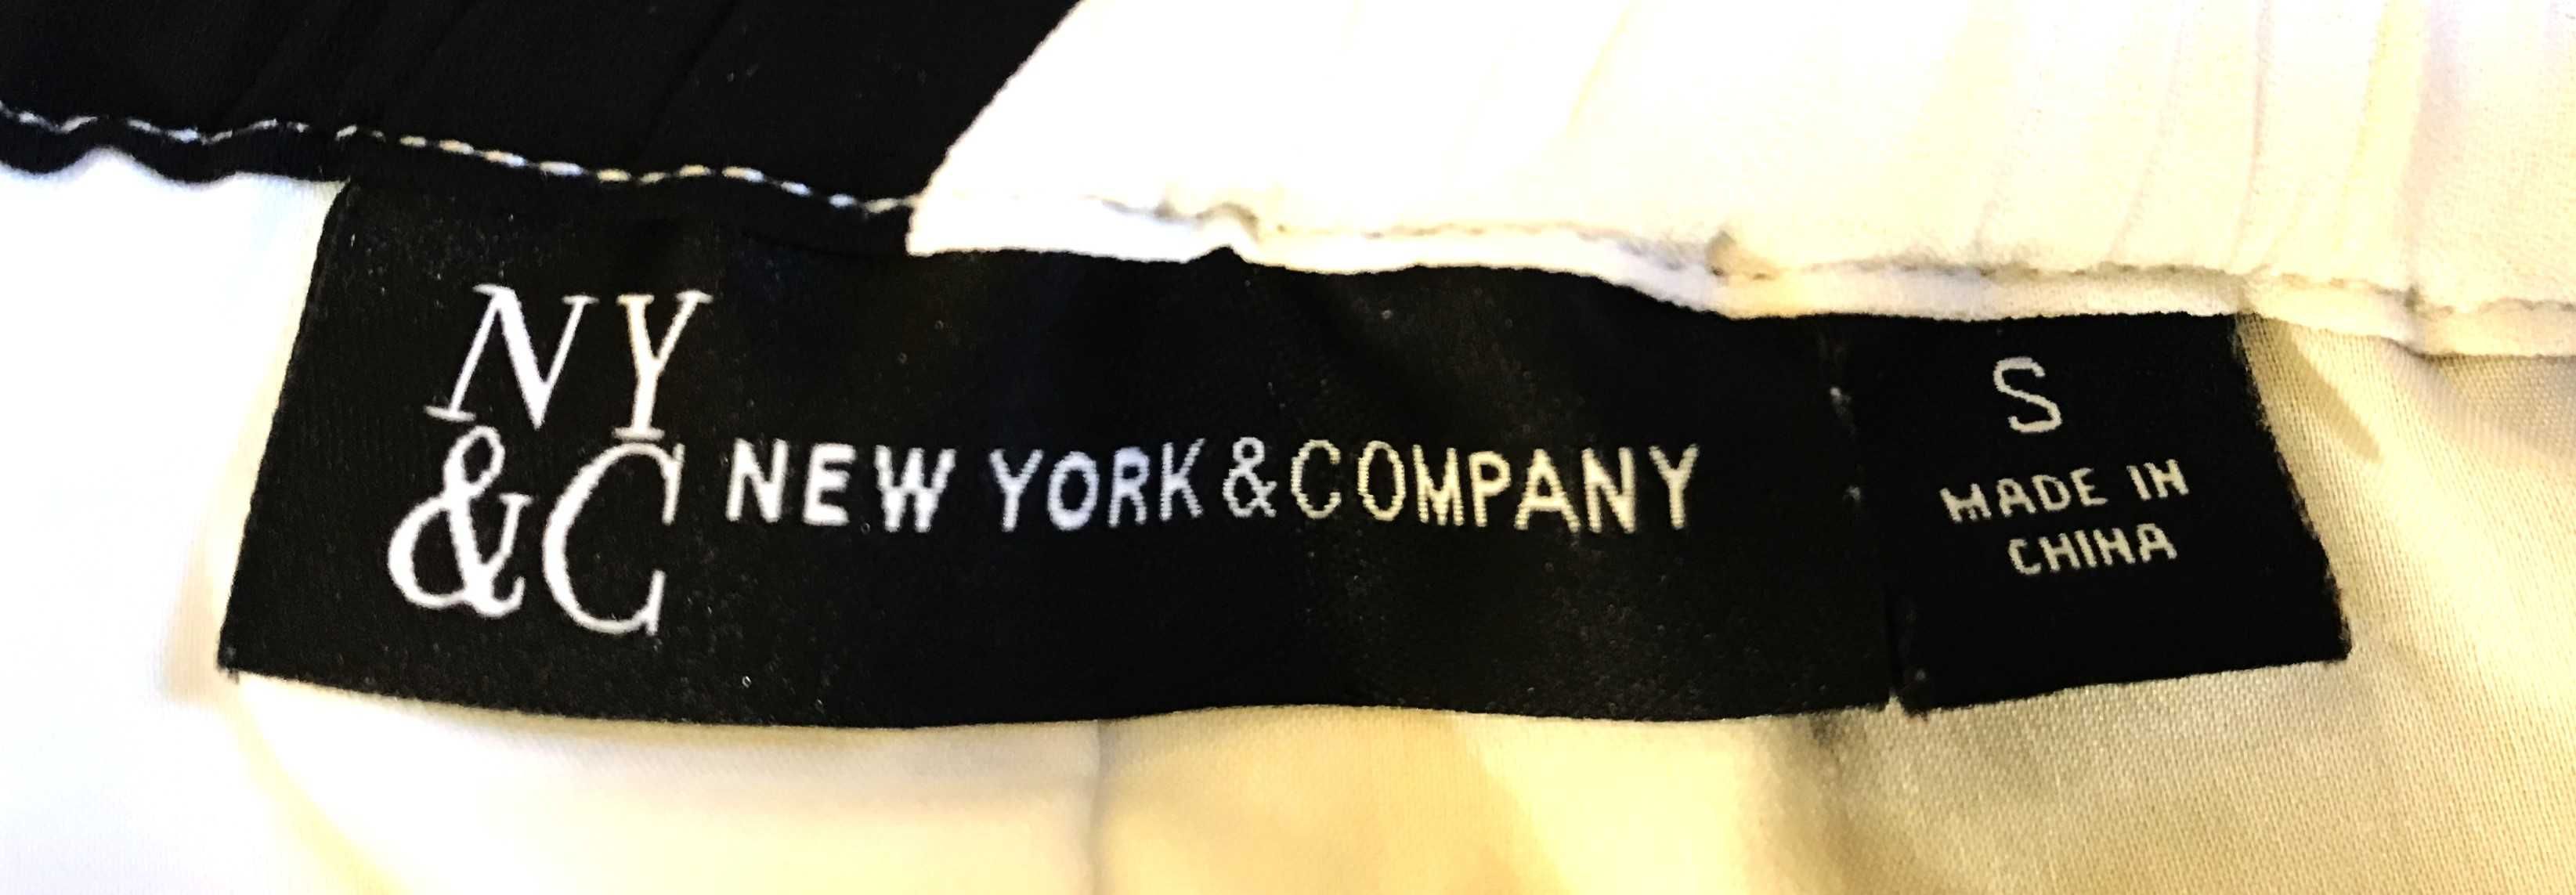 spódnica maxi new york & company op art biała czarna wzór koła 38